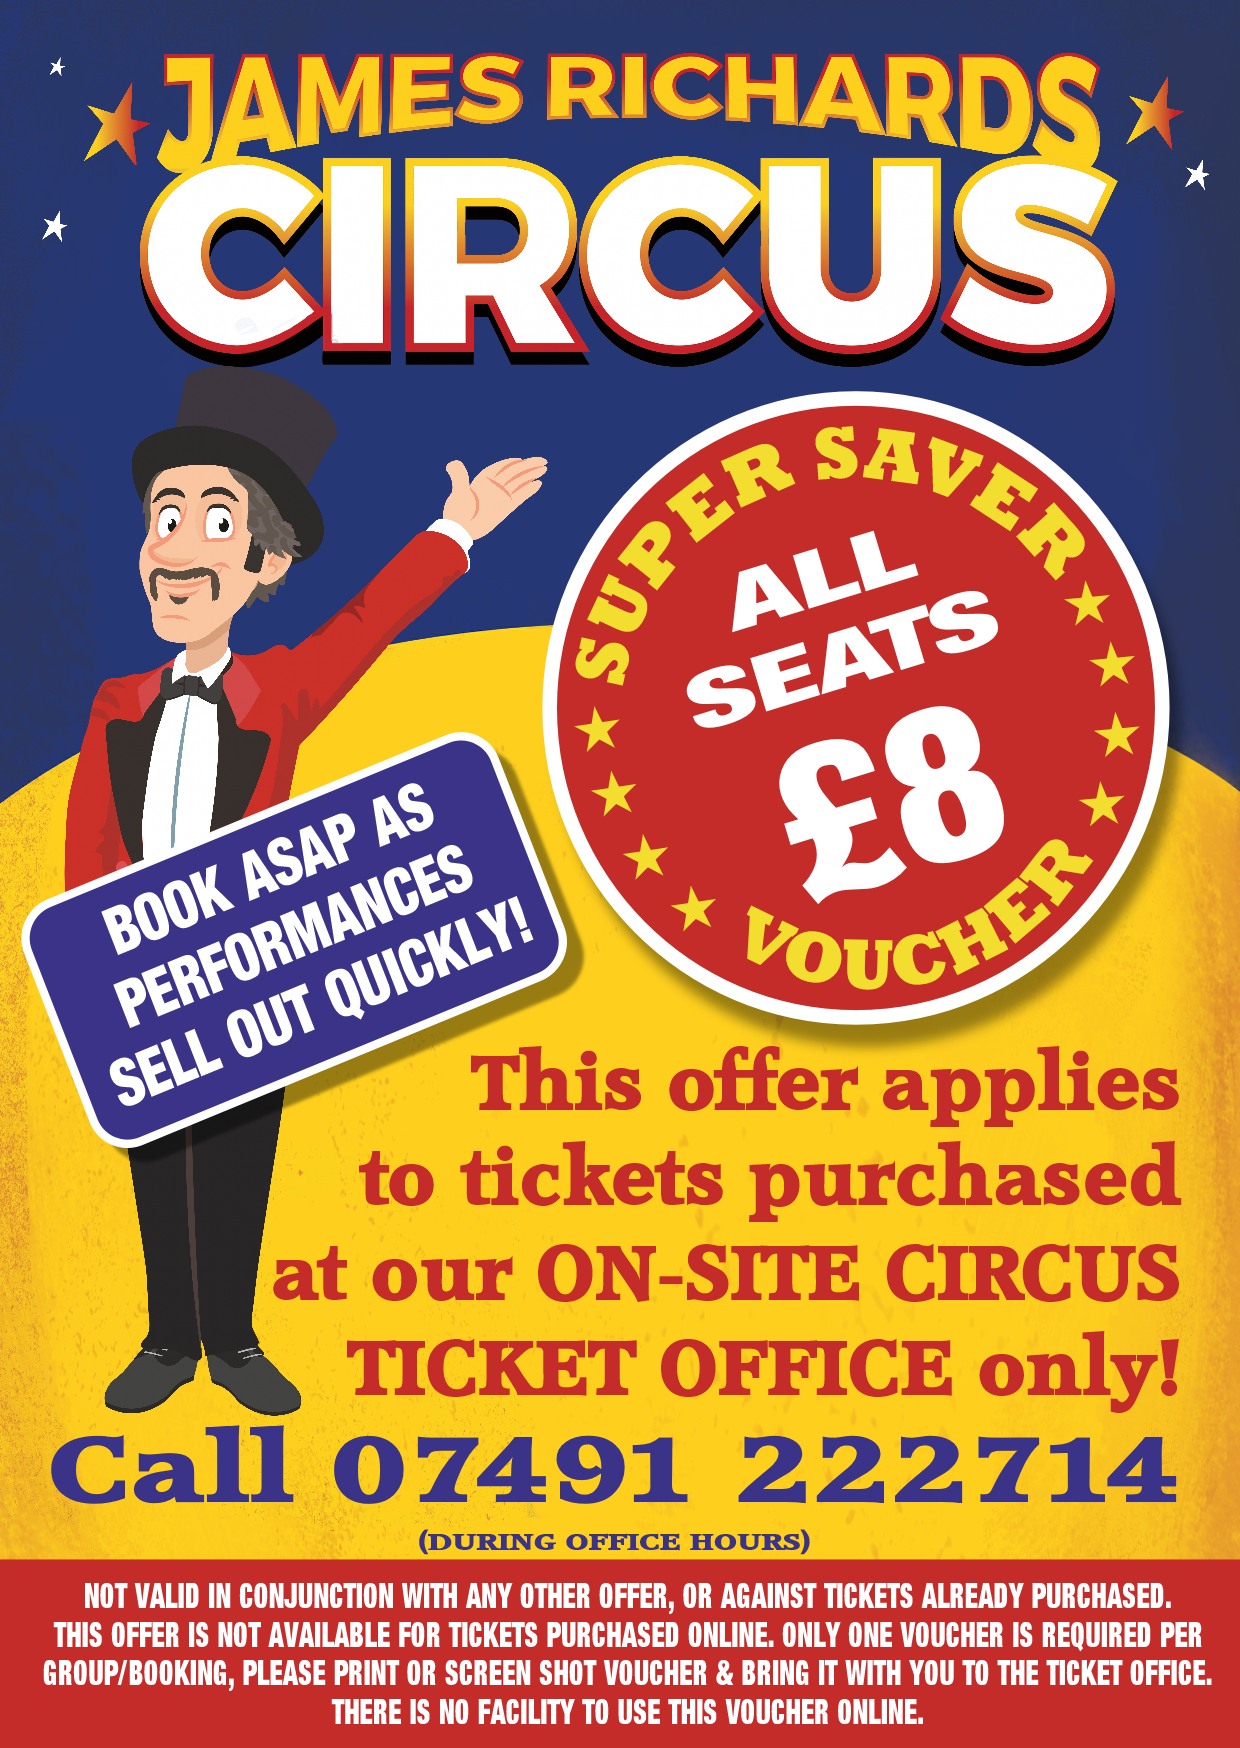 James Richards Circus Event Image